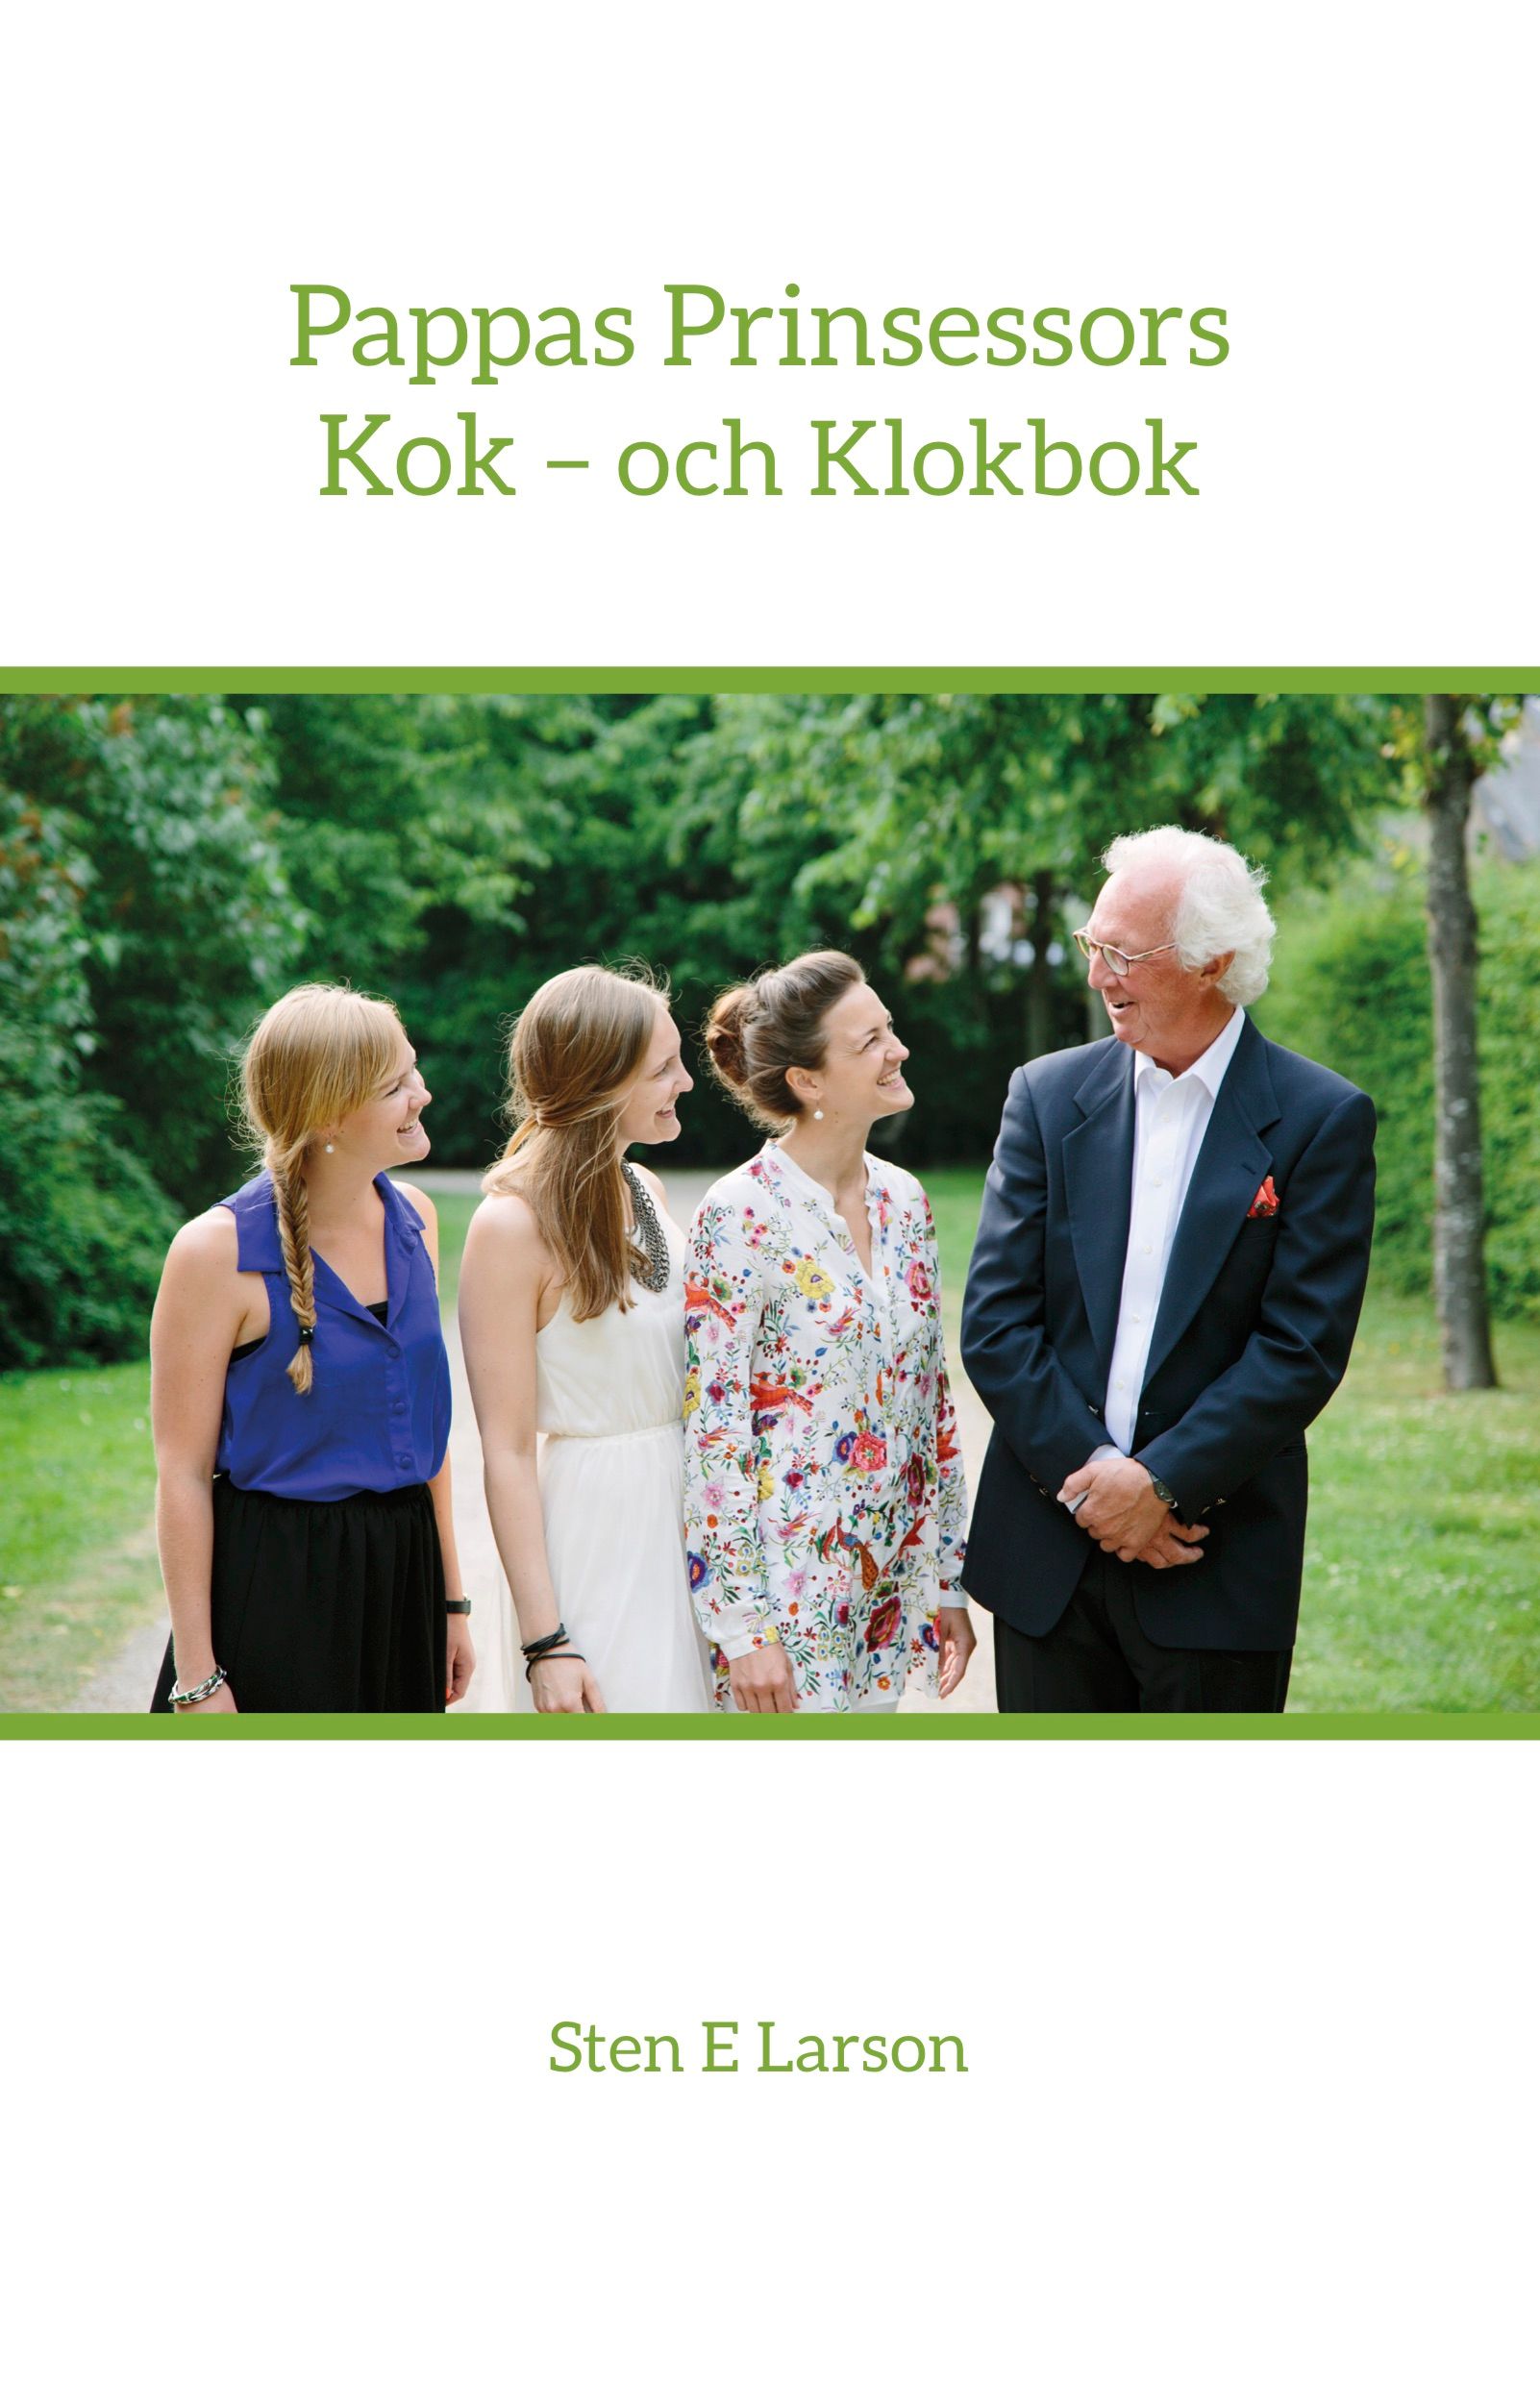 Pappas Prinsessors Kok - och Klokbok, eBook by Sten E Larson